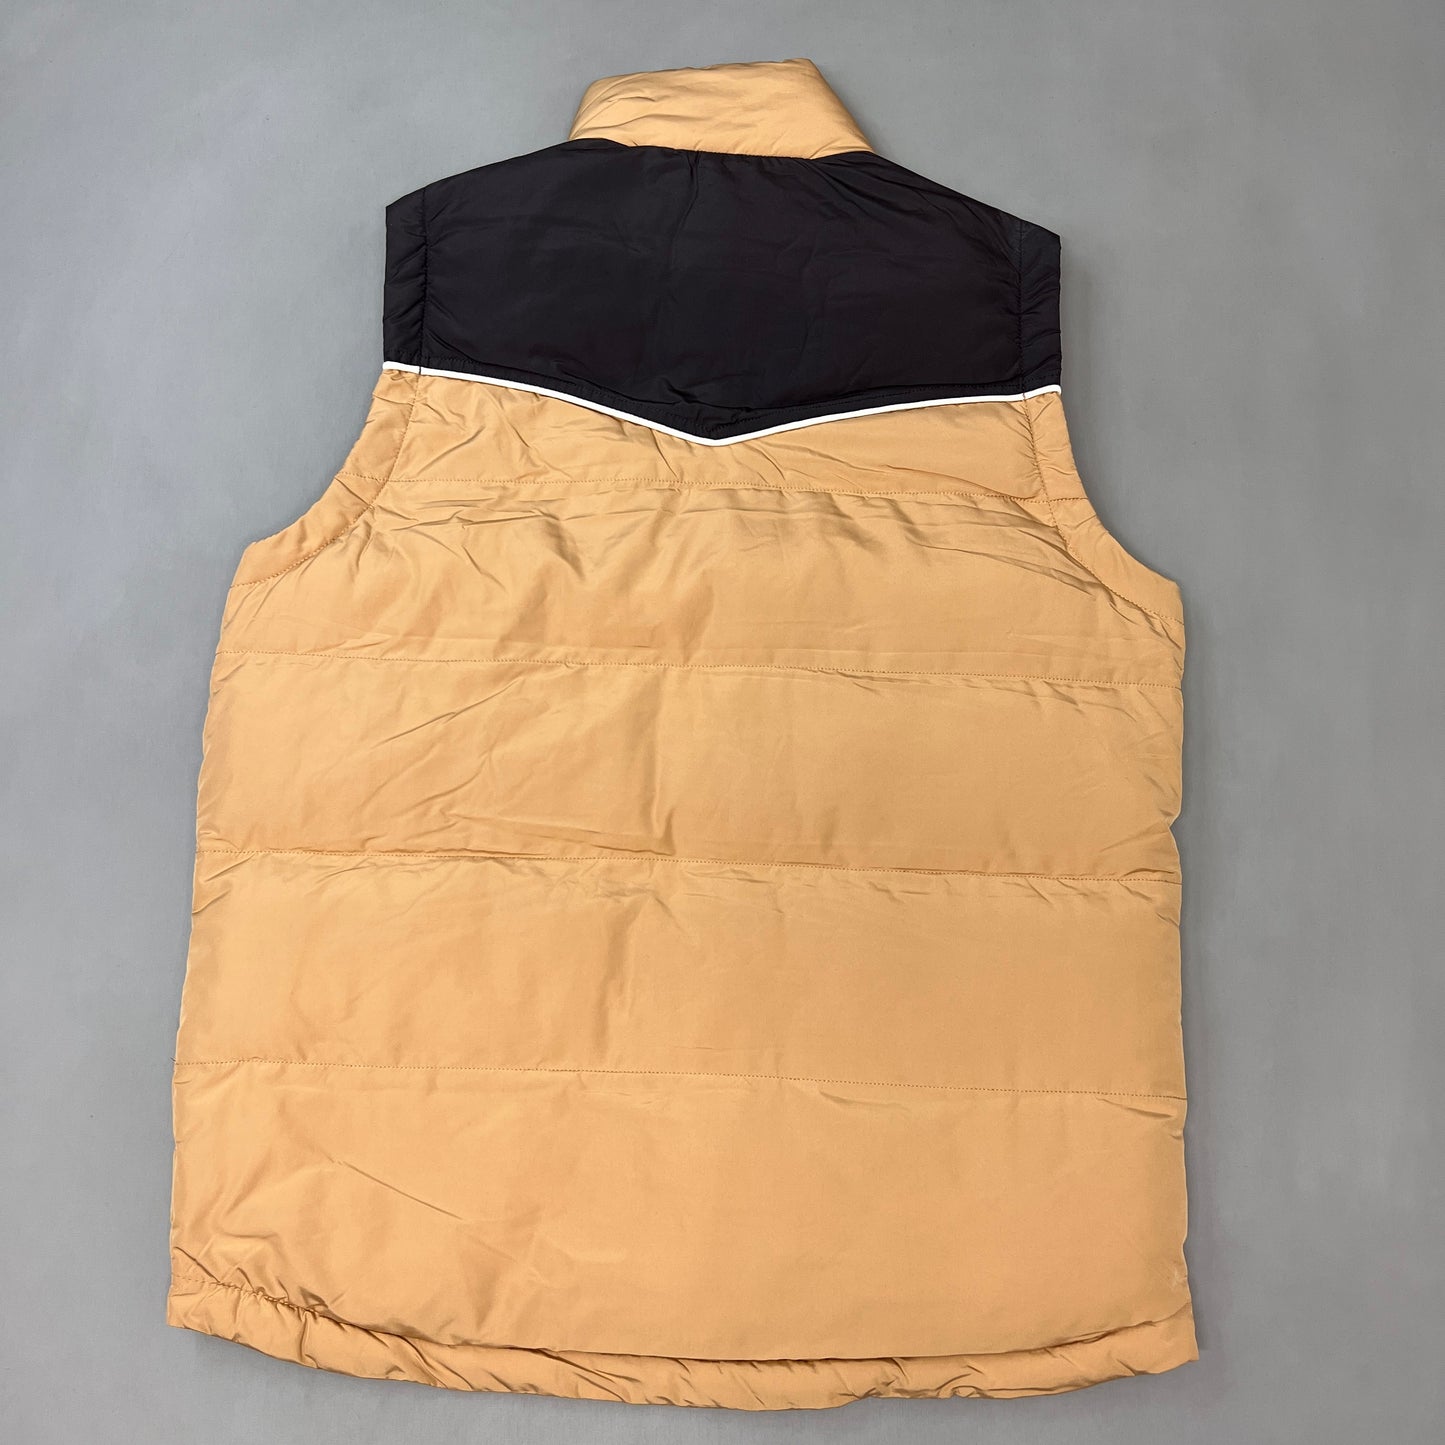 CINCH Quilted Vest Men's Sz XS Gold/Brown MWV1578001 (New)